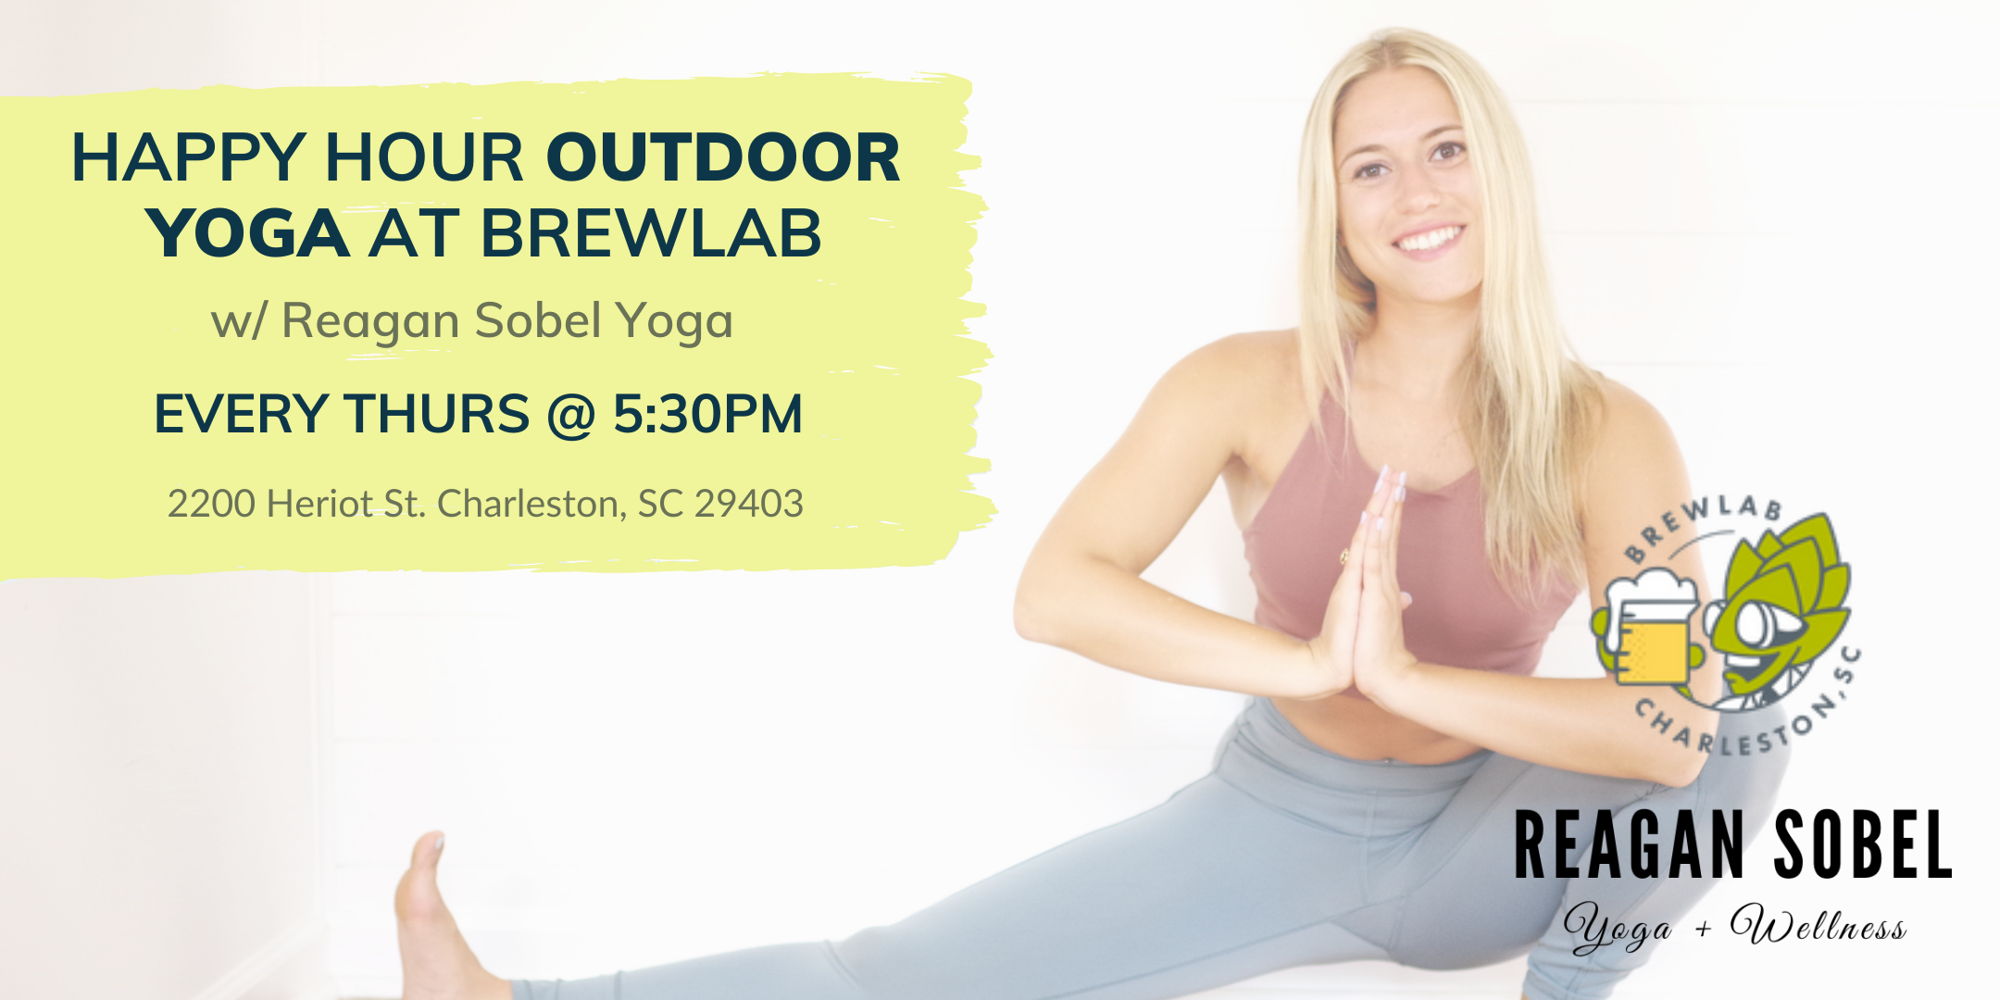 Outdoor Yoga at Brewlab w/ Reagan Sobel promotional image